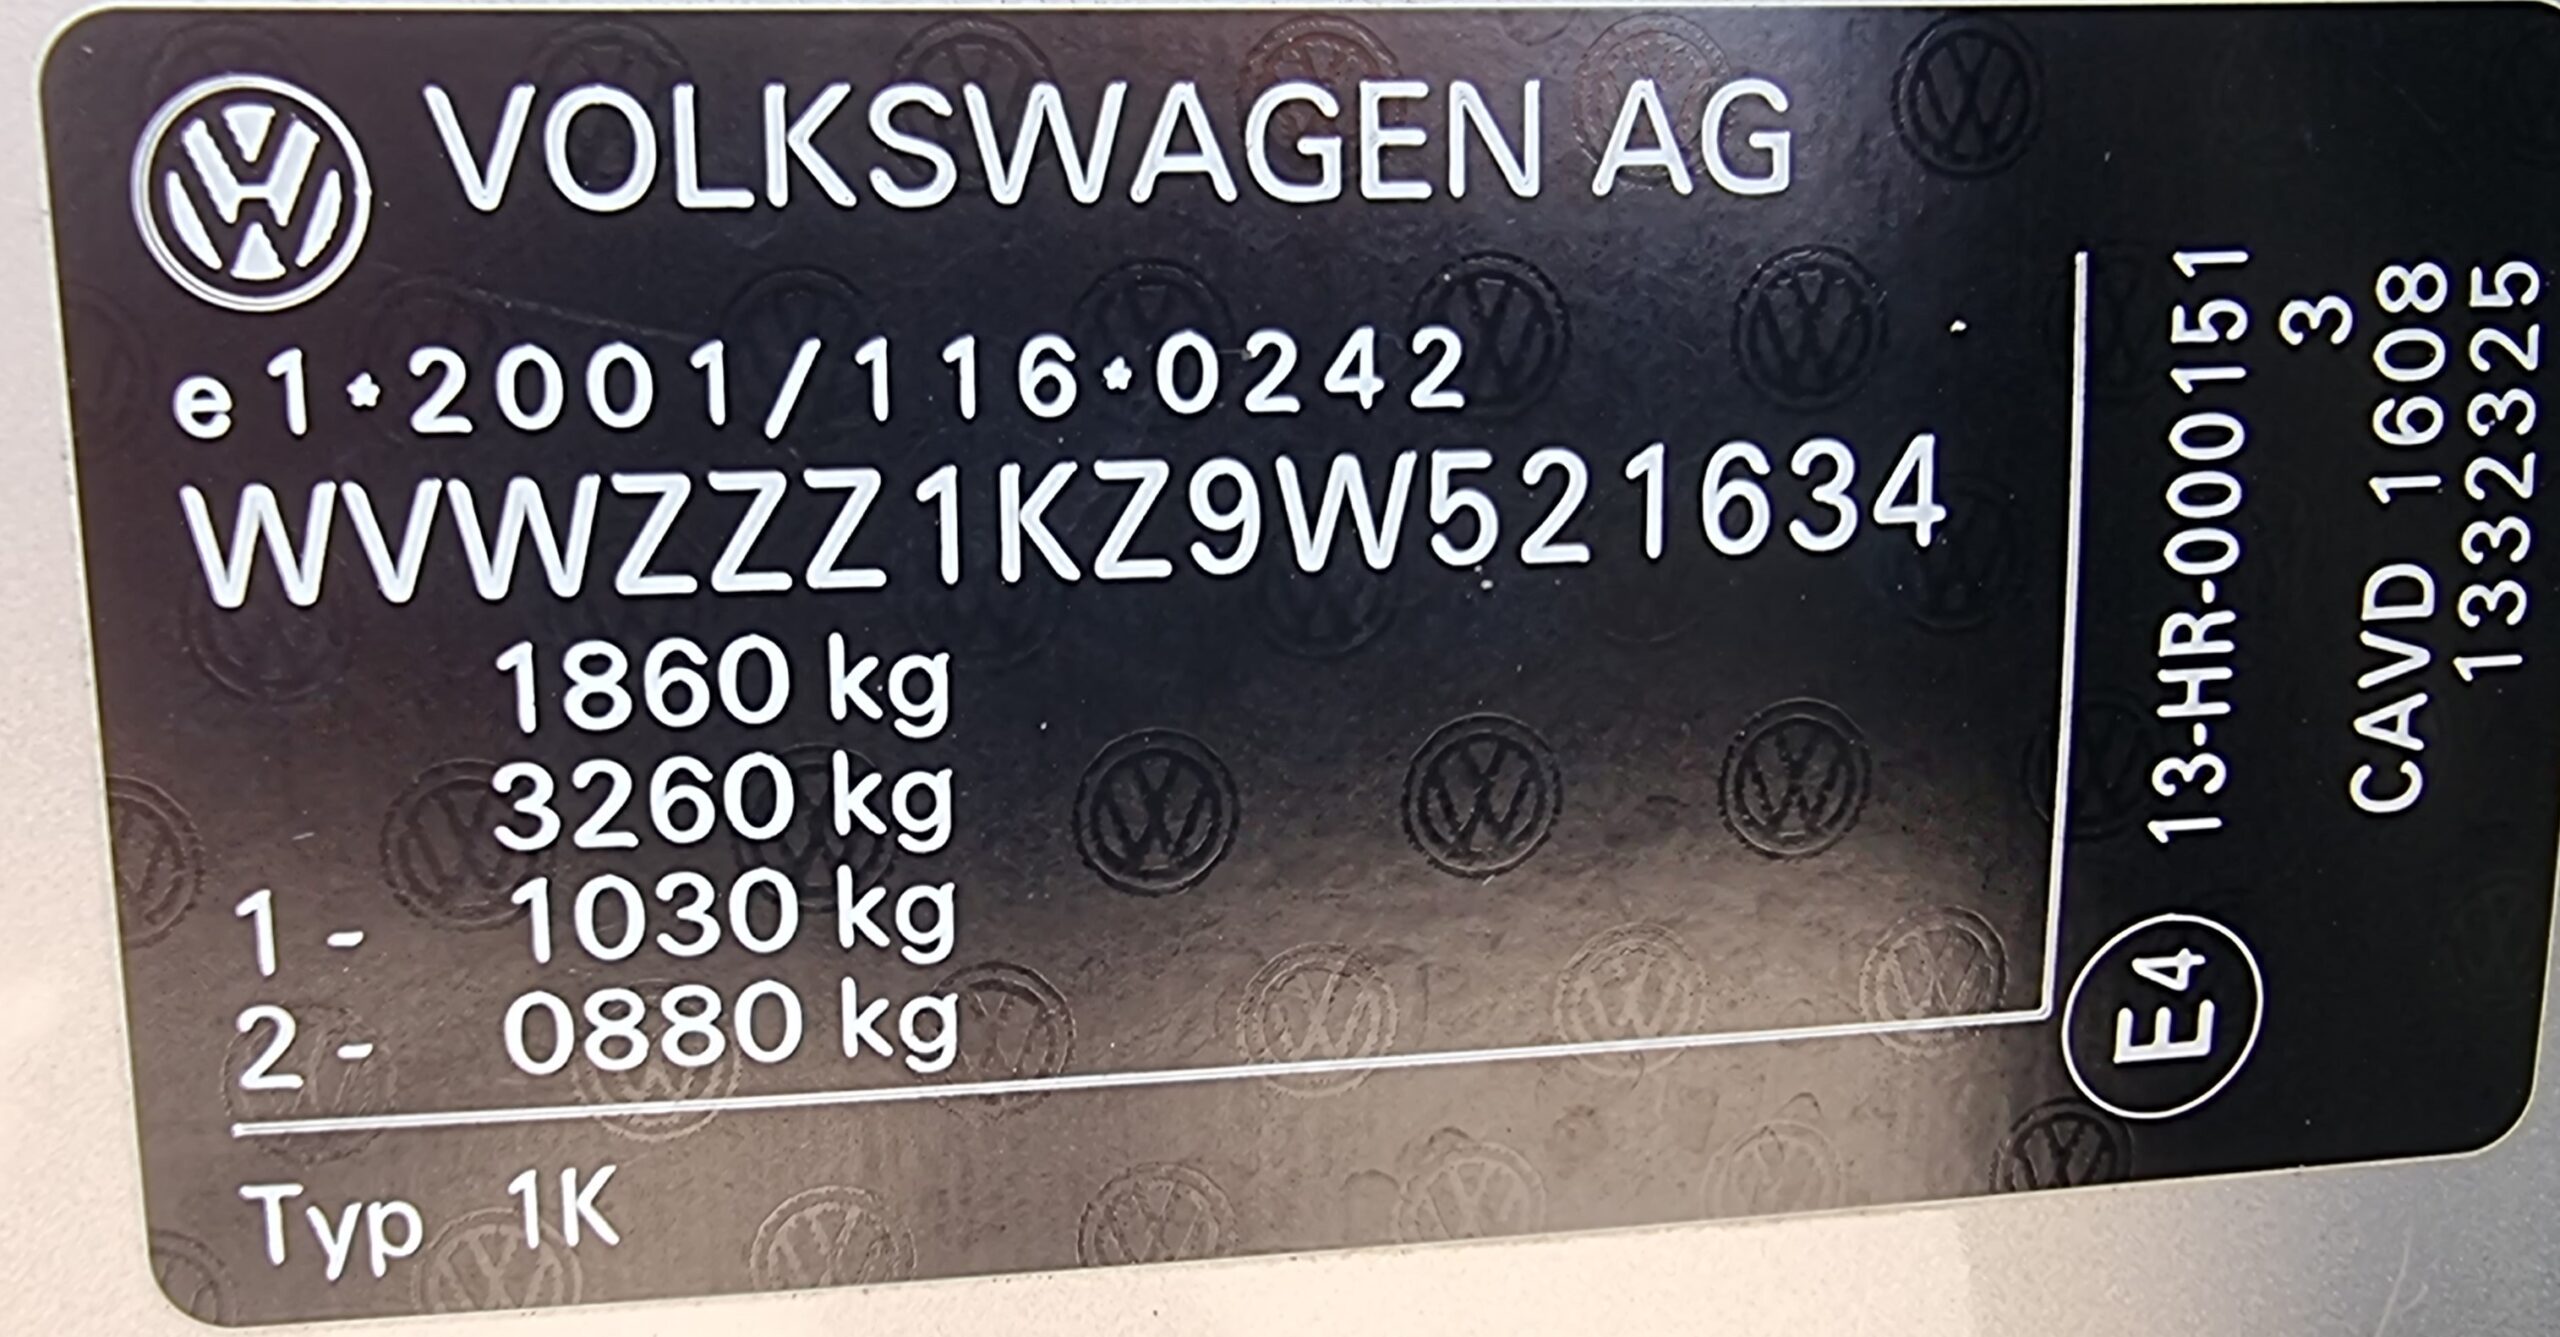 VW GOLF VI AUTOMAT HIGHLINE, 1.4 TFSI, 160 CP, EURO 5, AN 2009